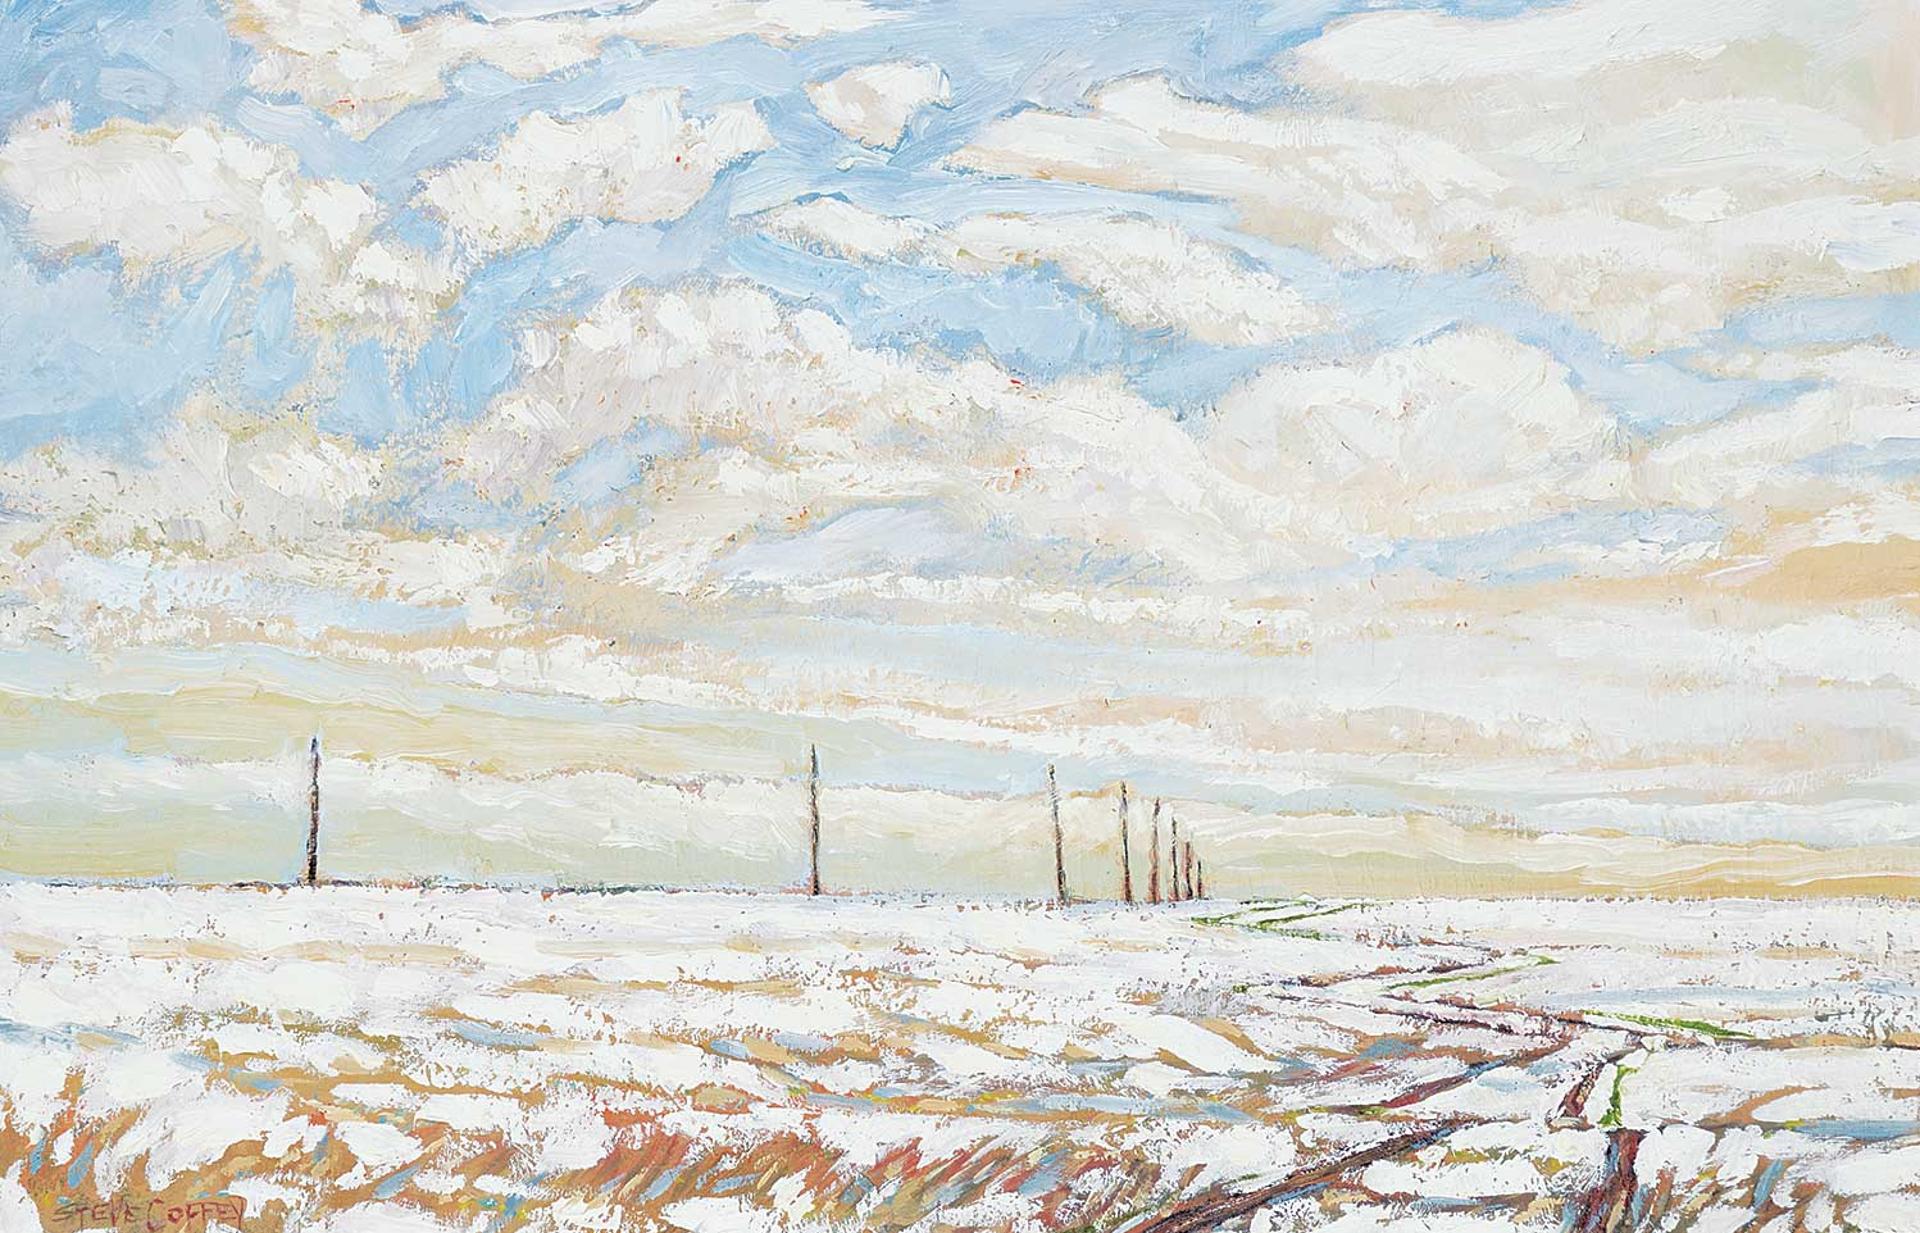 Steve Coffey (1963) - Pole Road and Melting Snow